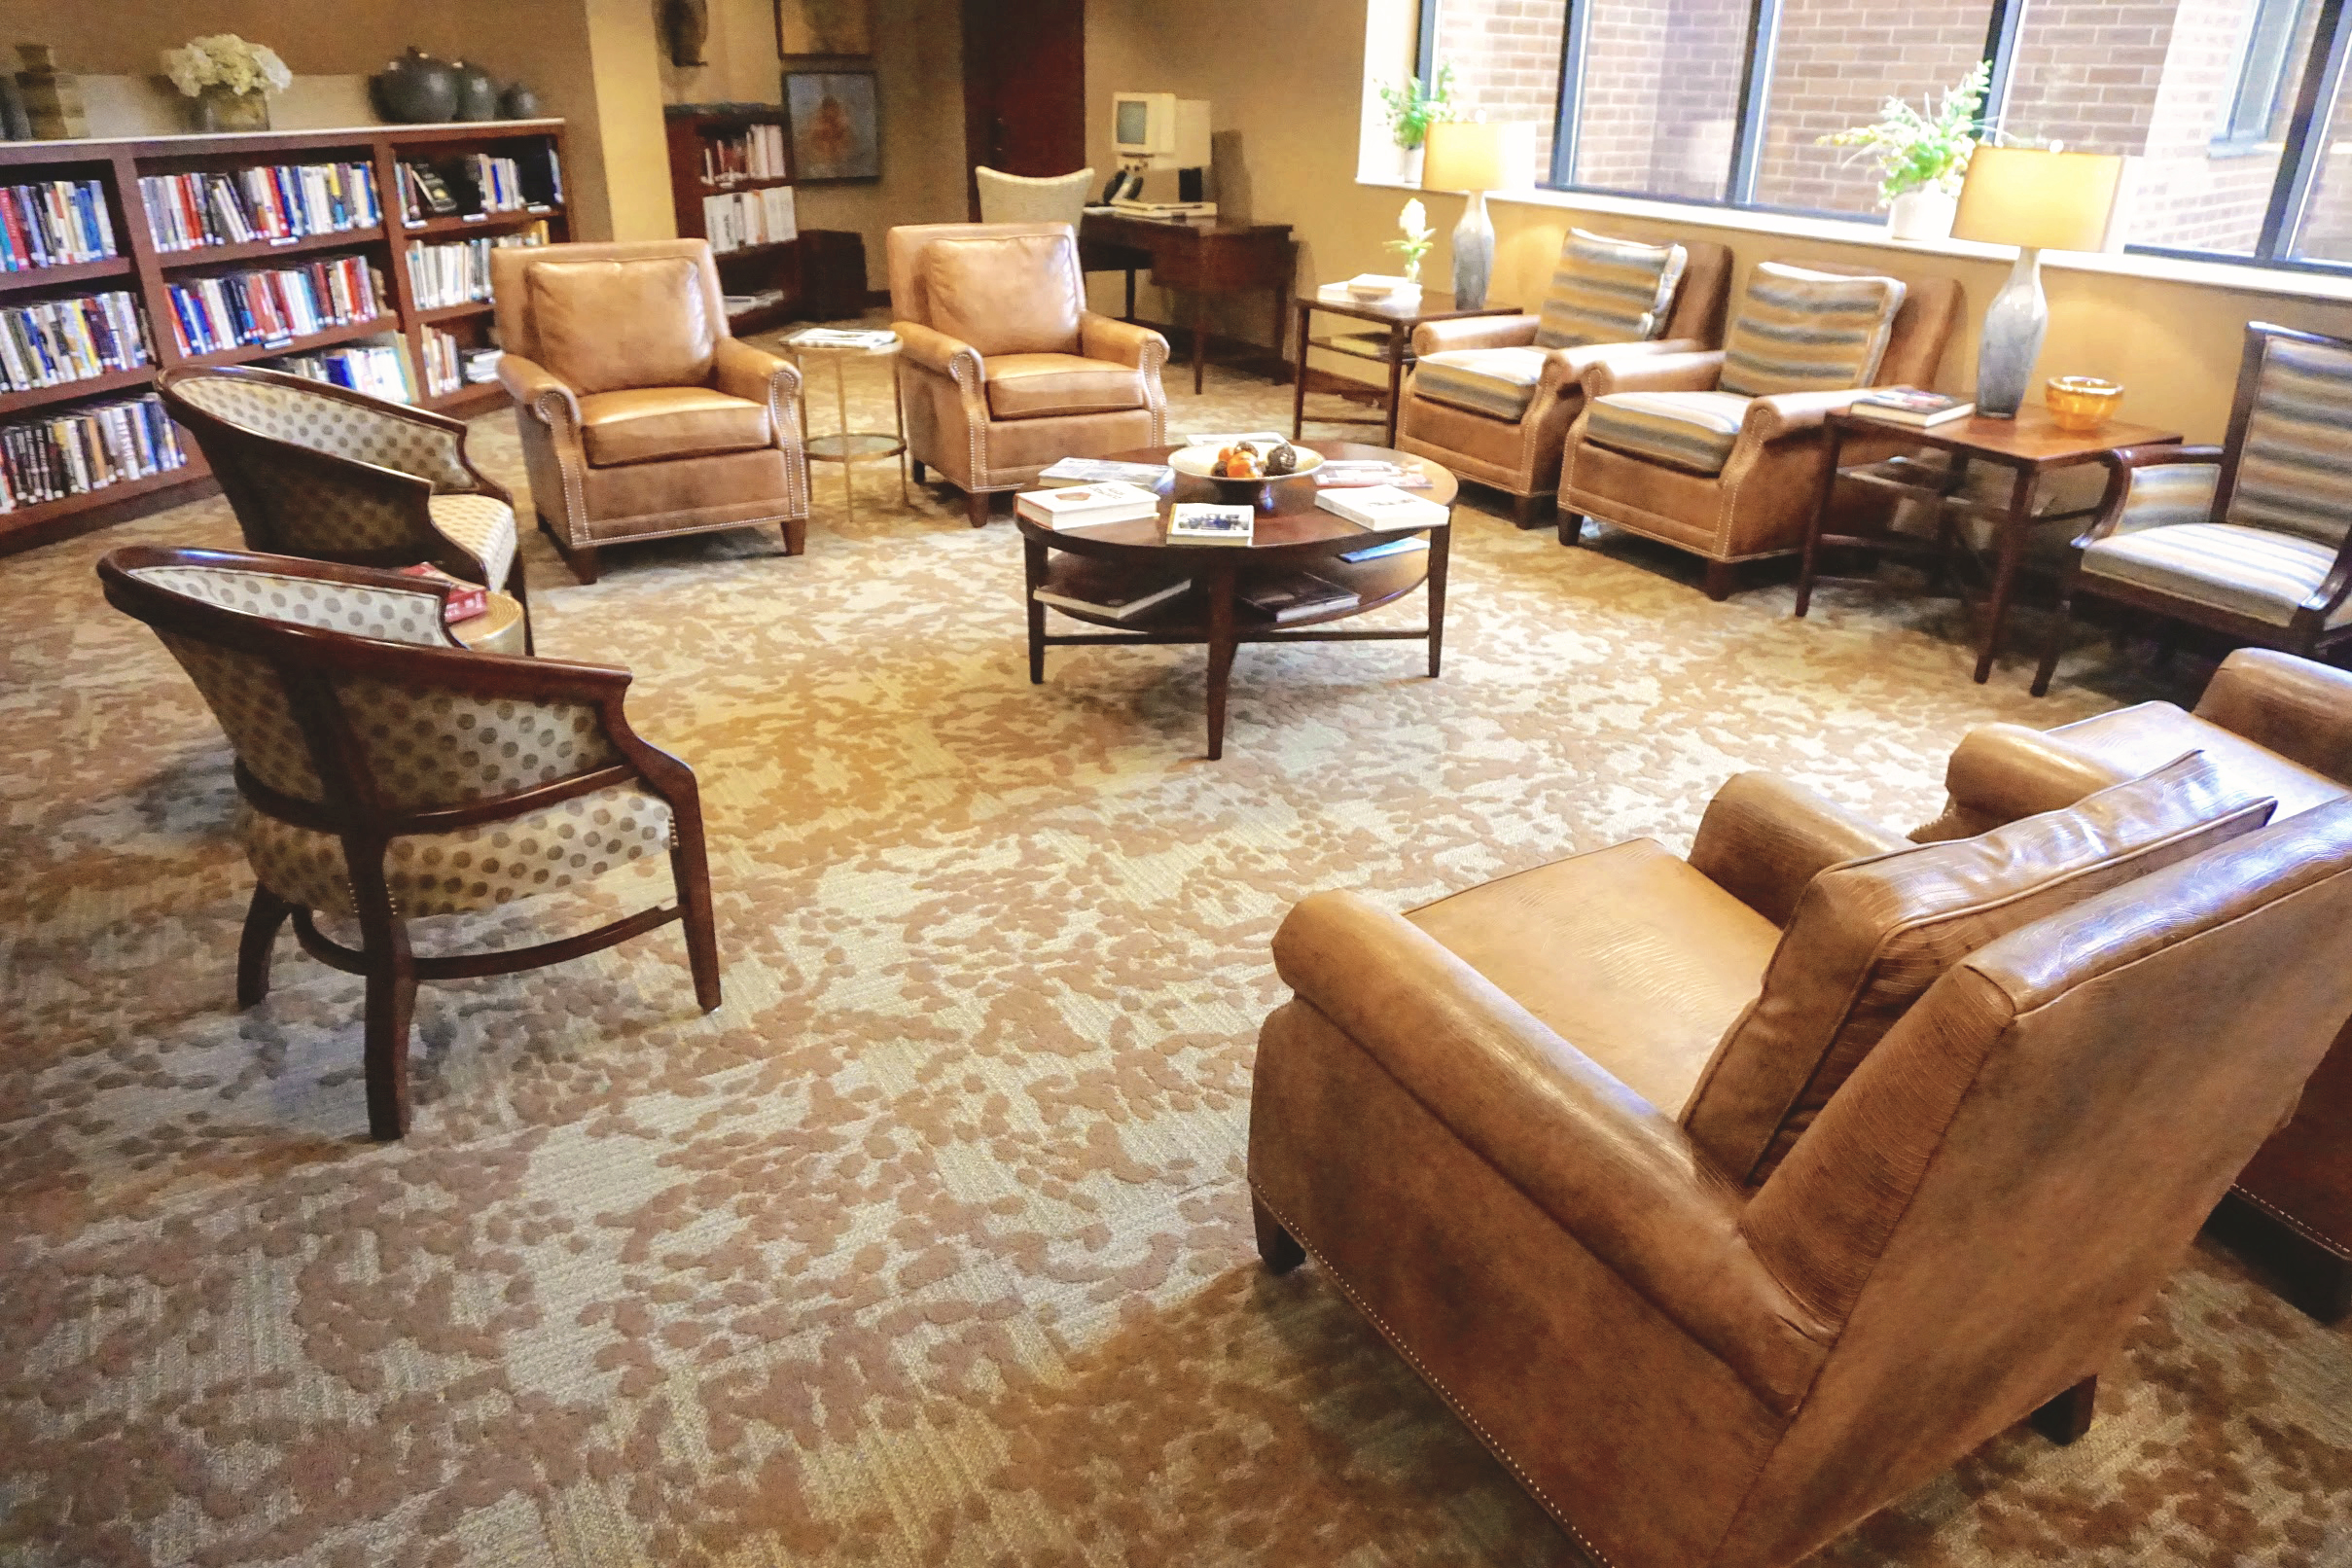 Mount Washington flooring and carpets